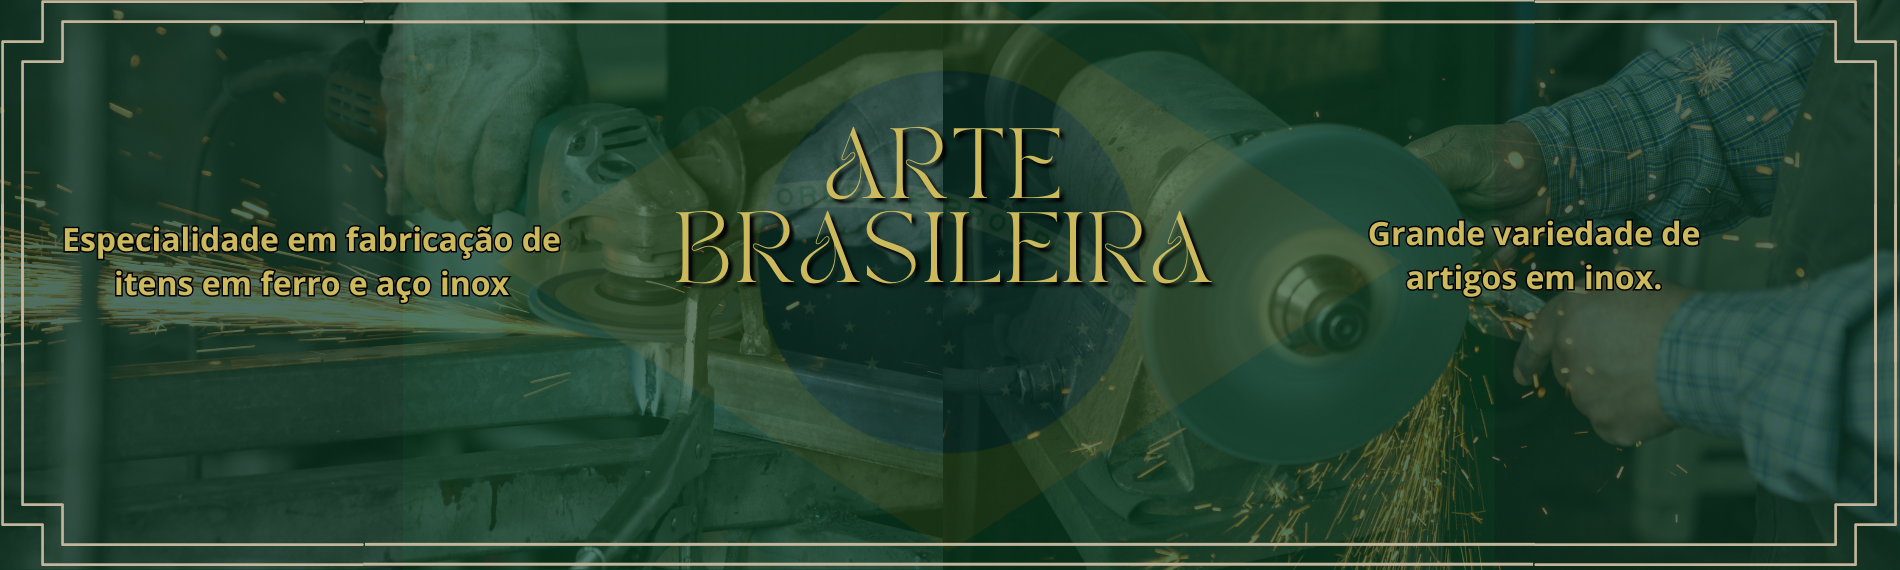 banner da empresa Serralheria Arte Brasileira